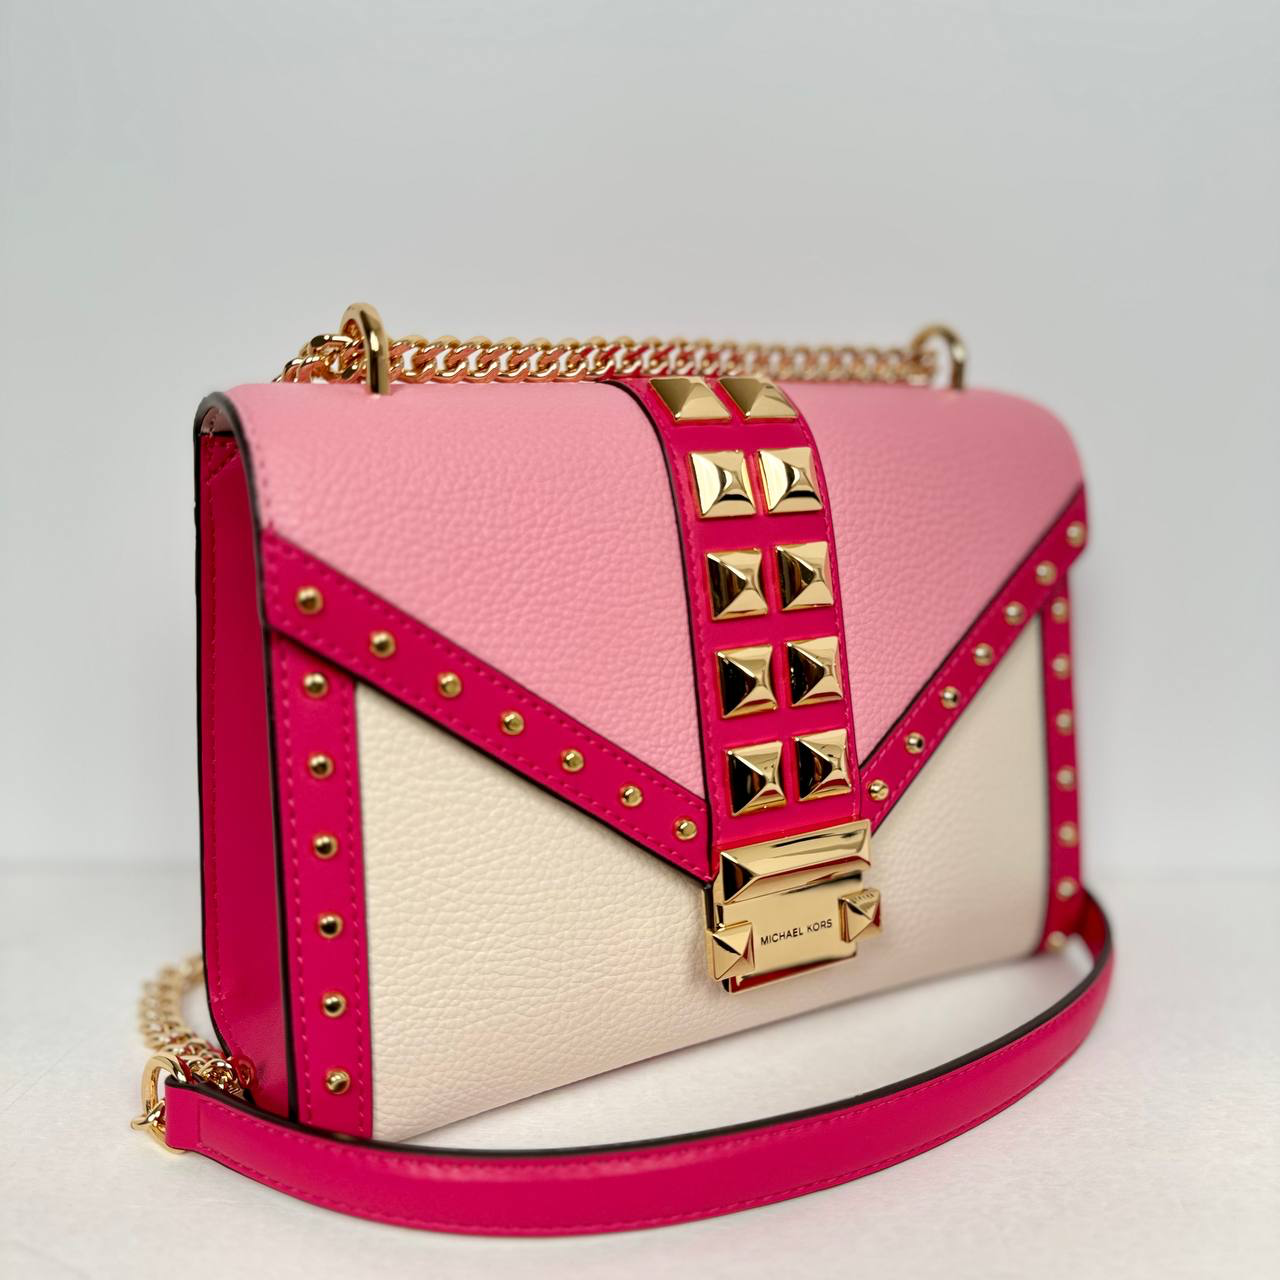 MK Whitney Medium Flap Chain Shoulder Bag in Electric Pink Multi (35S4GWHL6T)